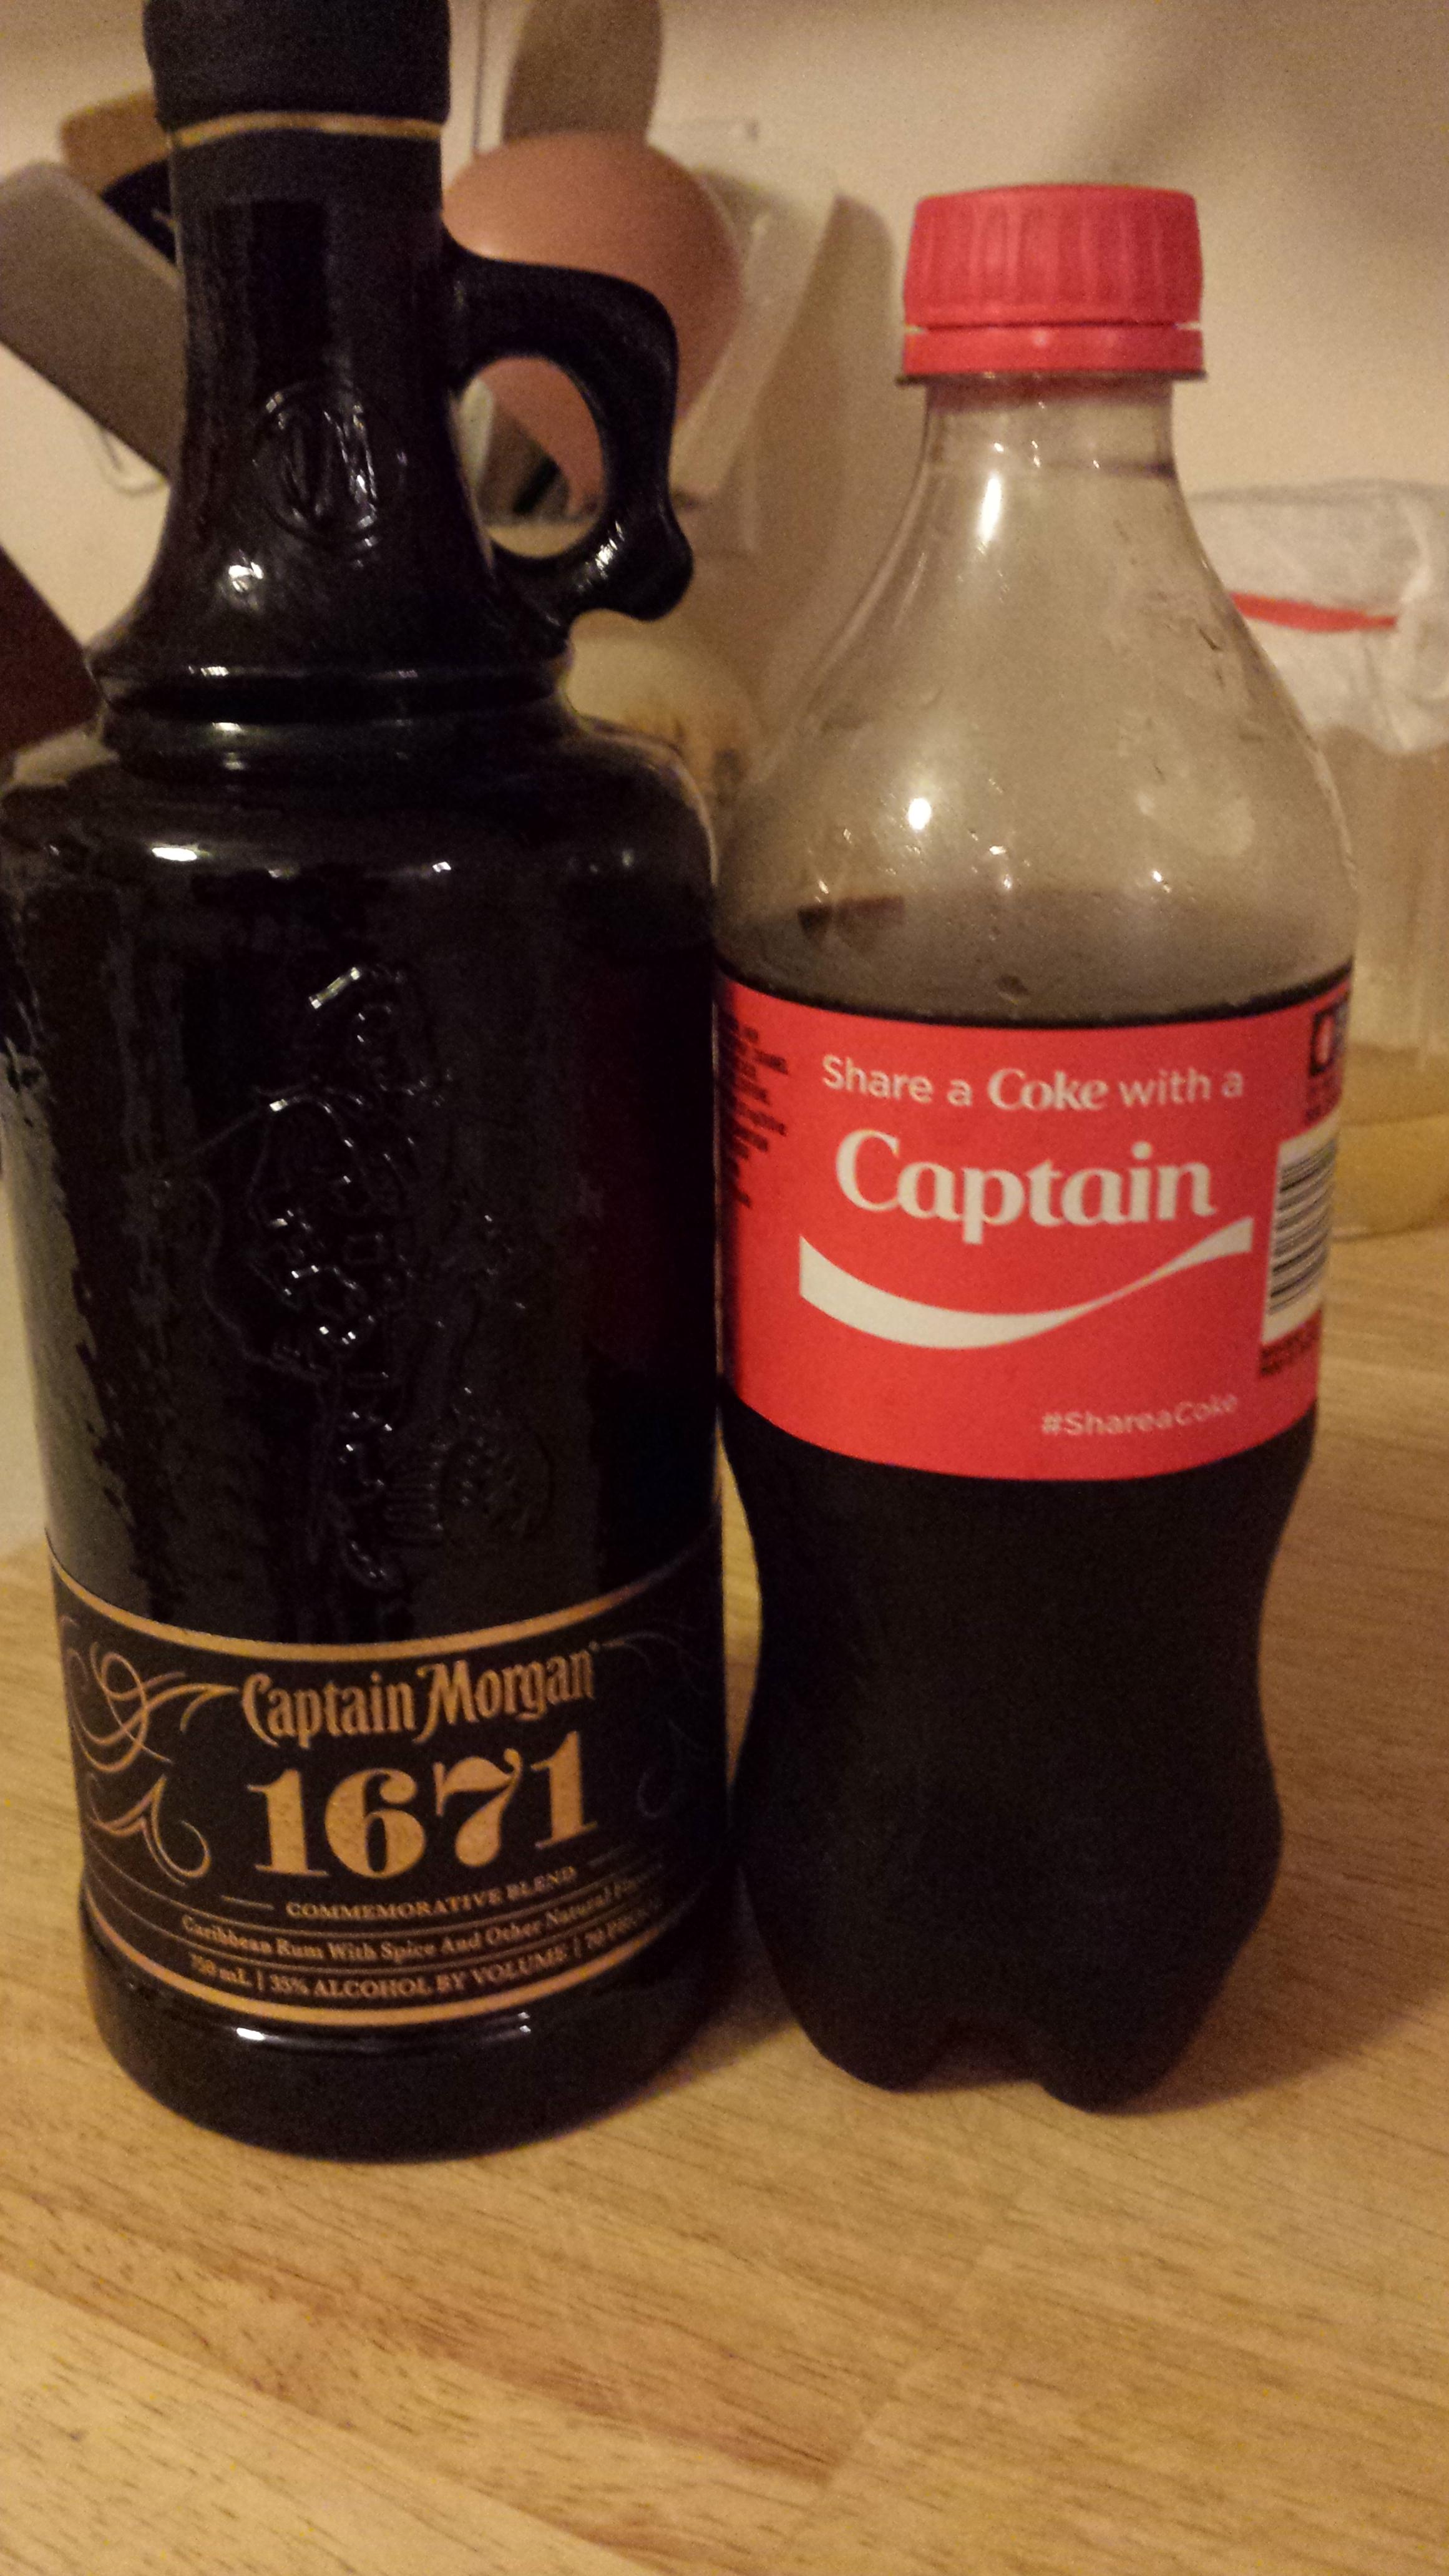 liqueur - a Coke with Captain Captain Morgan 1671